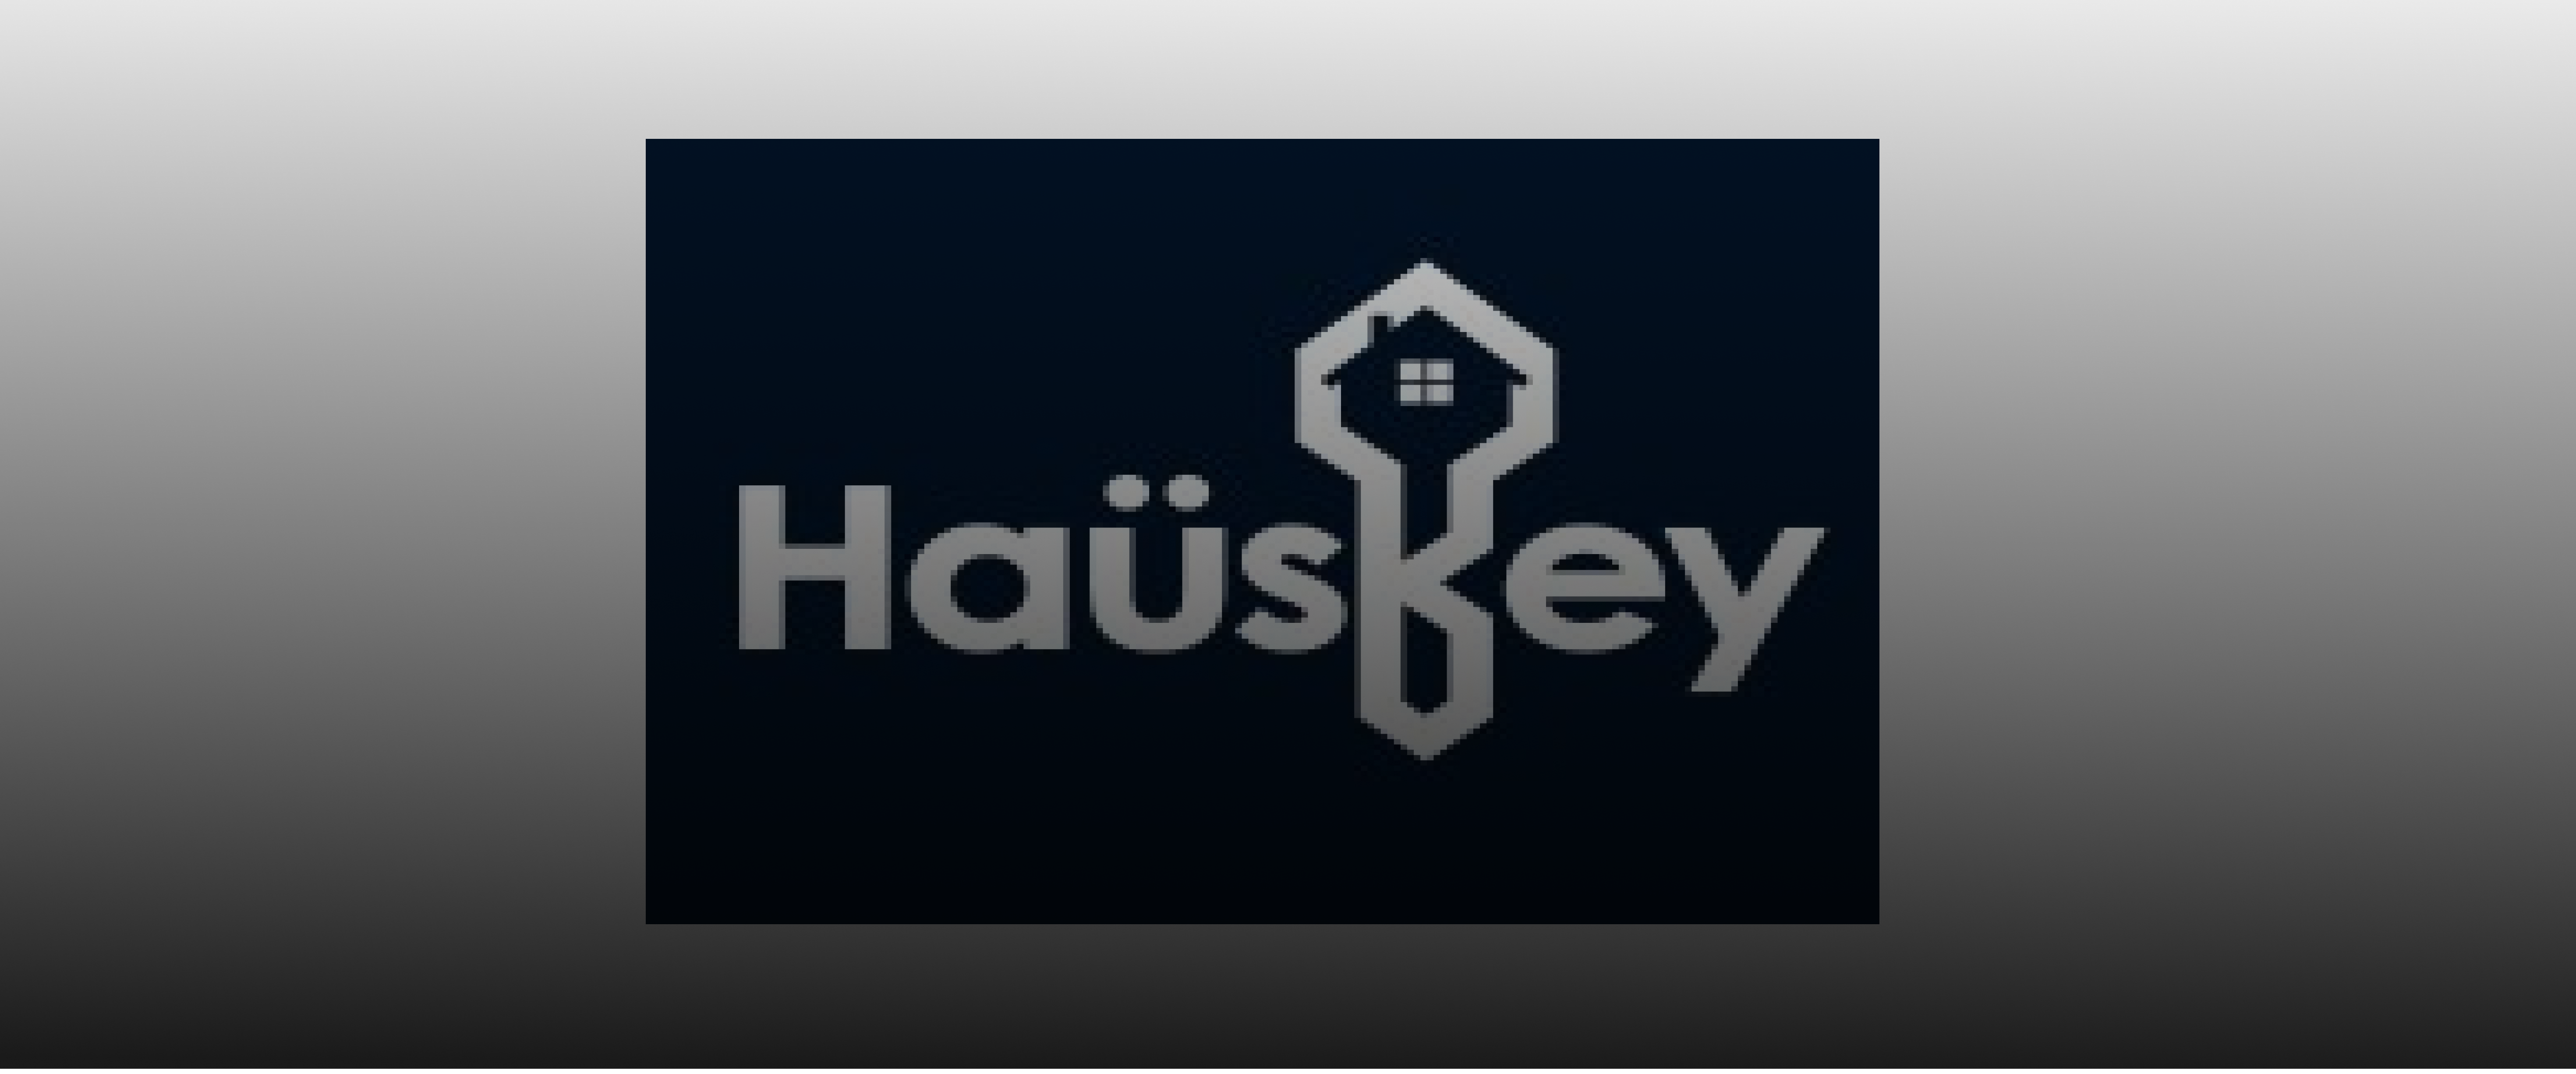 Hausekey case study banner image